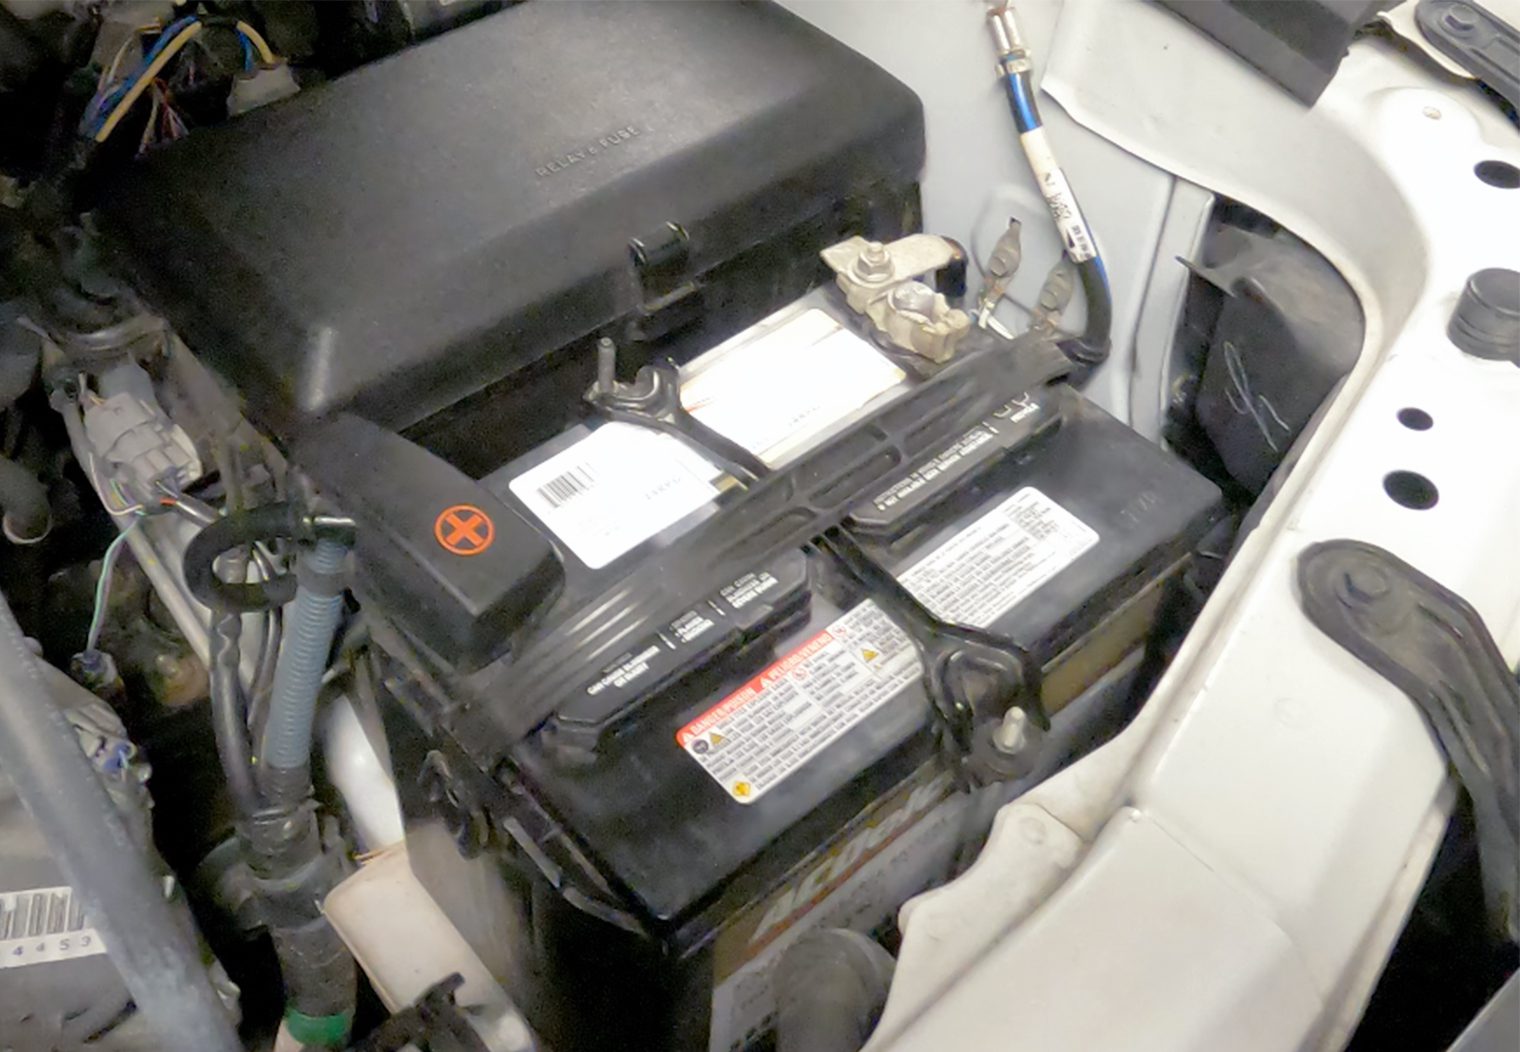 Toyota Tundra Battery in engine bay